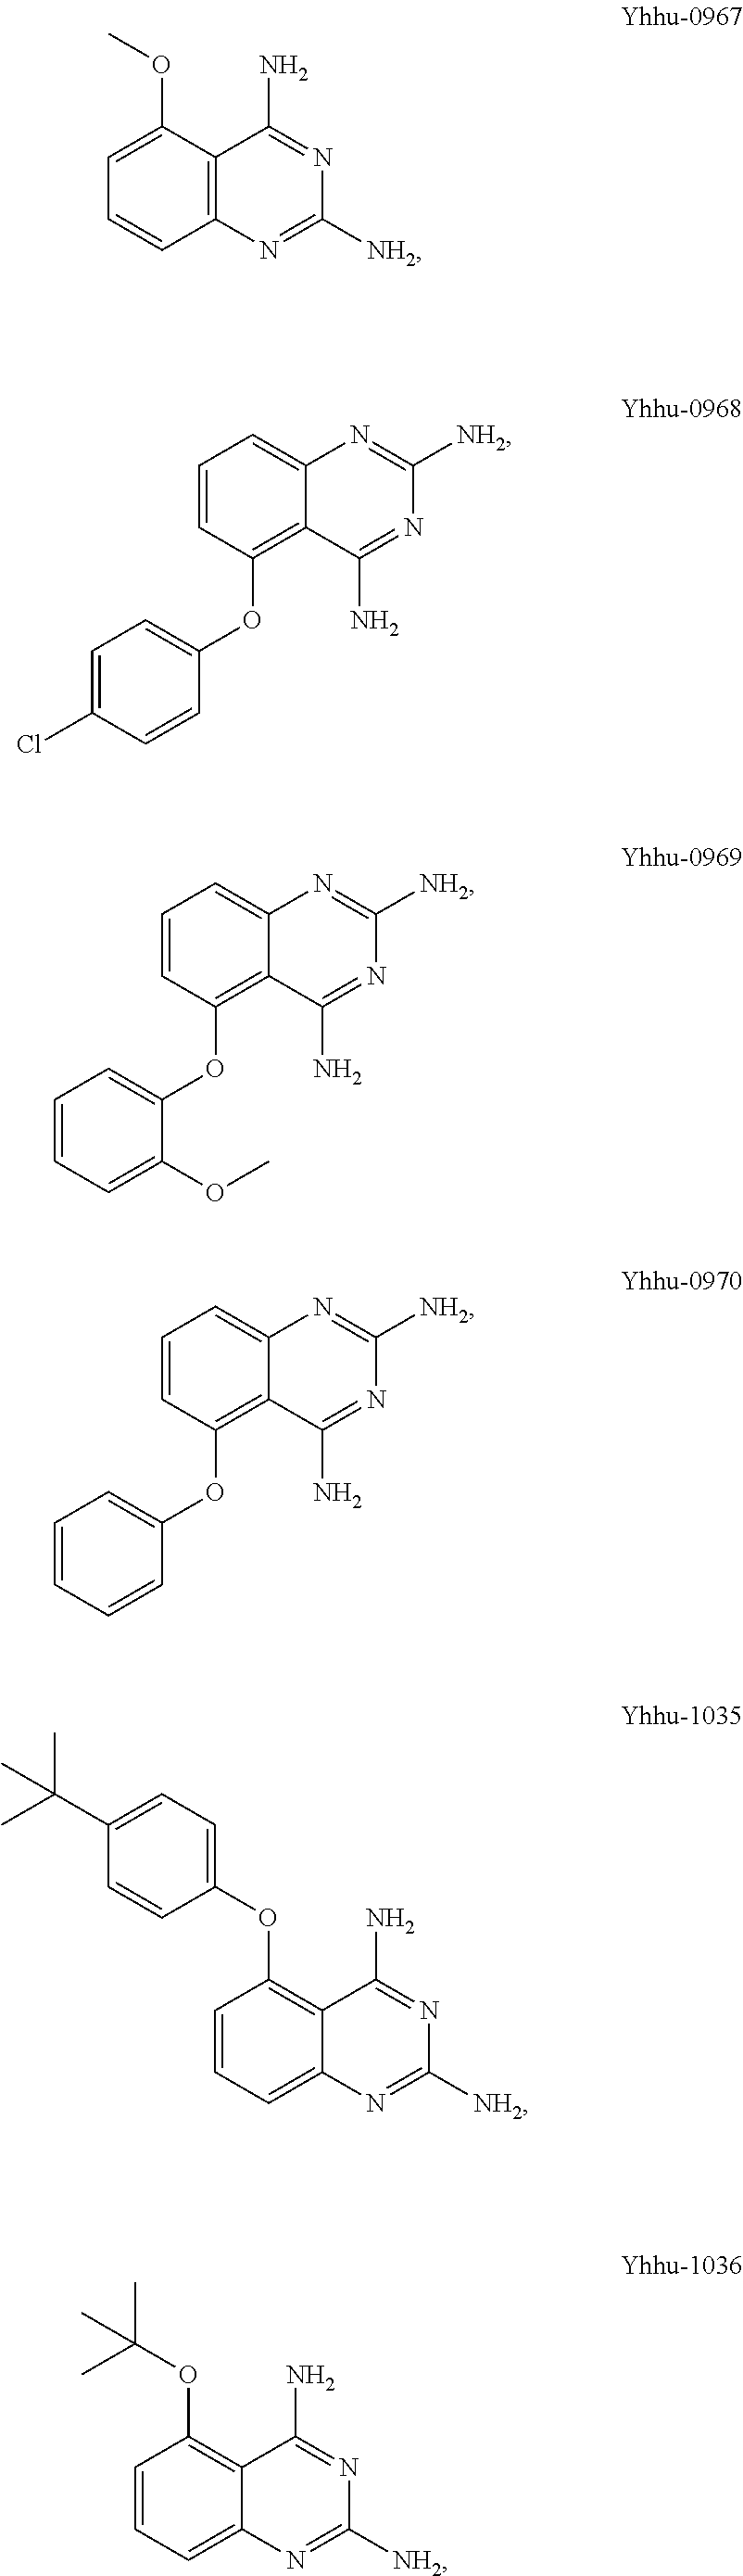 Use of a quinazoline compound in preparing a medicament against flaviviridae virus